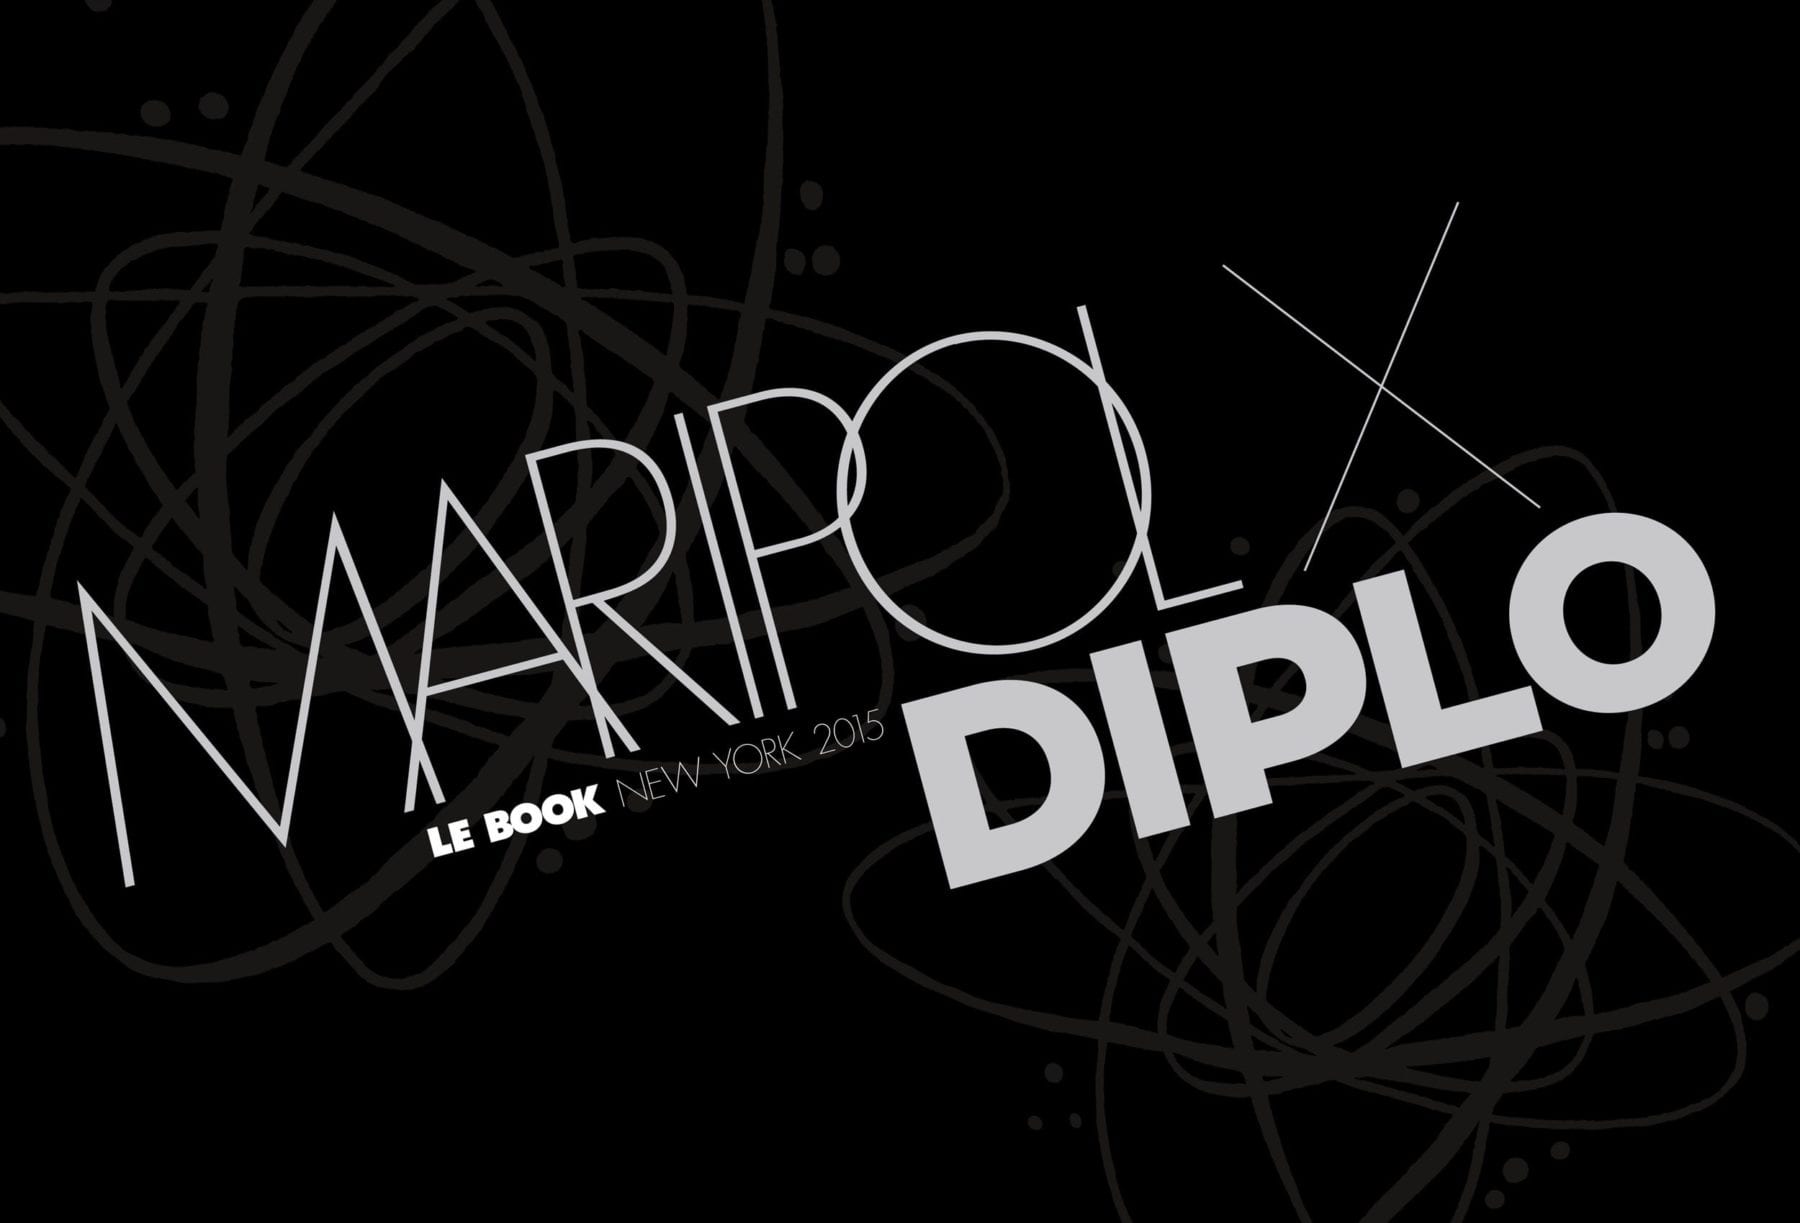 LE BOOK X MARIPOL X DIPLO2